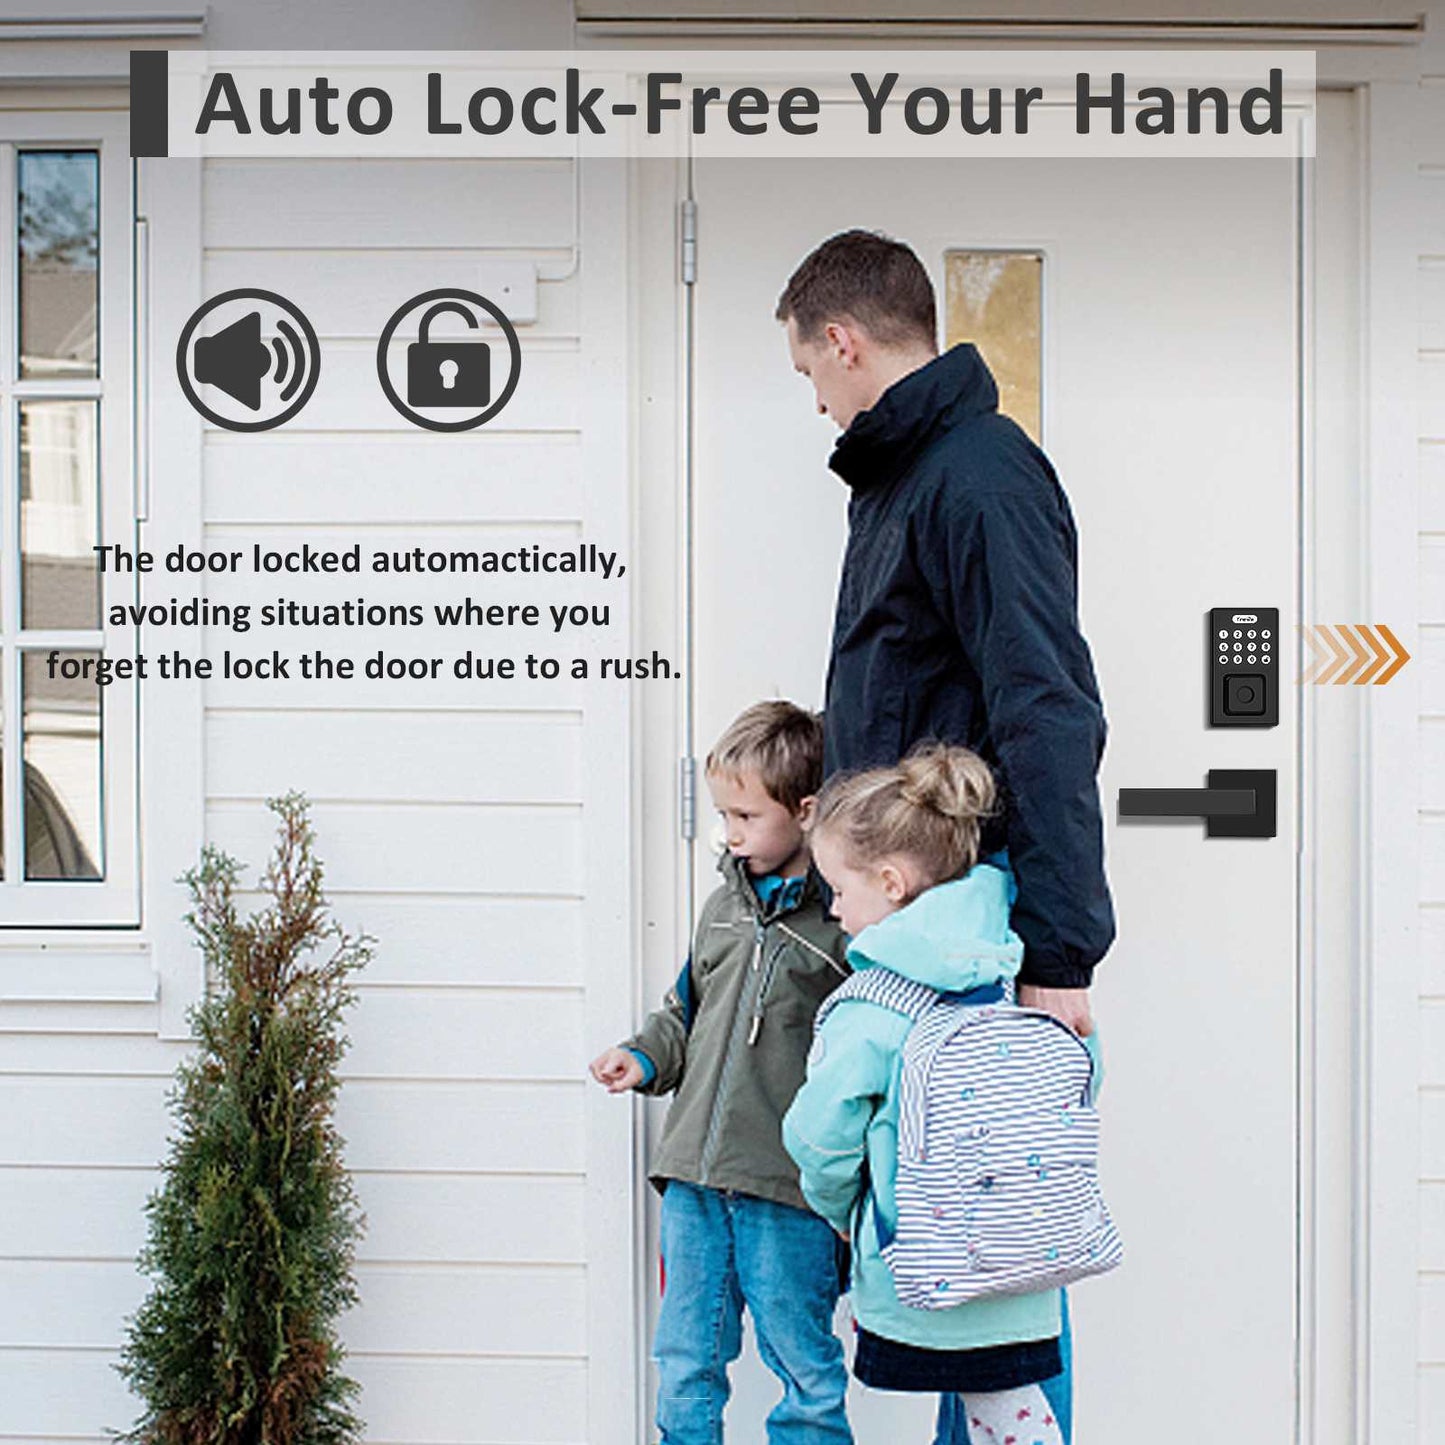 Tinewa Fingerprint Door Lock, Square Keypad Door Lock with 2 Handles, Electronic Smart Deadbolt, Front Door Handle Sets, APP Control, Keyless Entry, Auto Lock